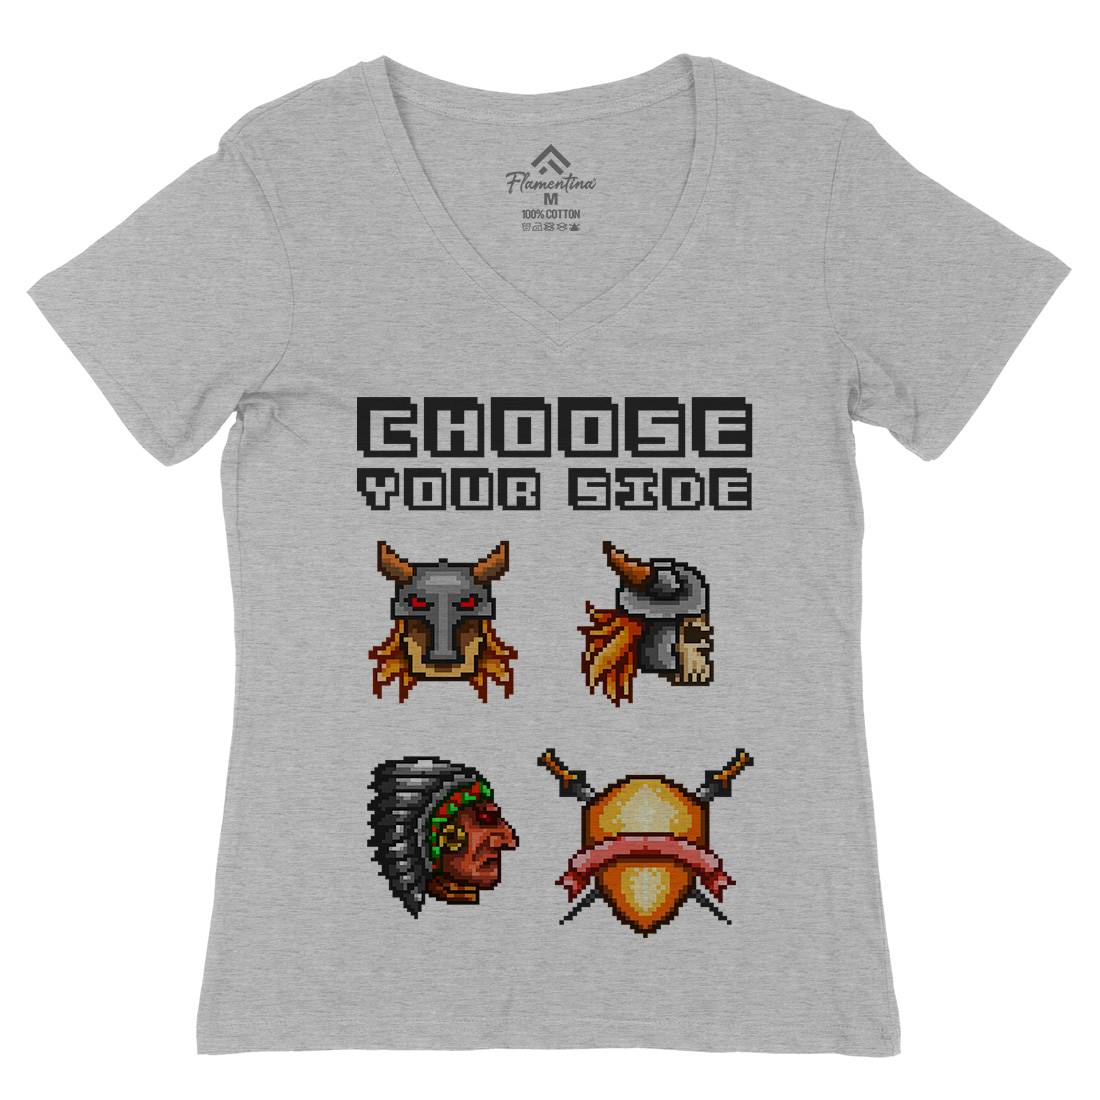 Choose Your Side Womens Organic V-Neck T-Shirt Geek B890